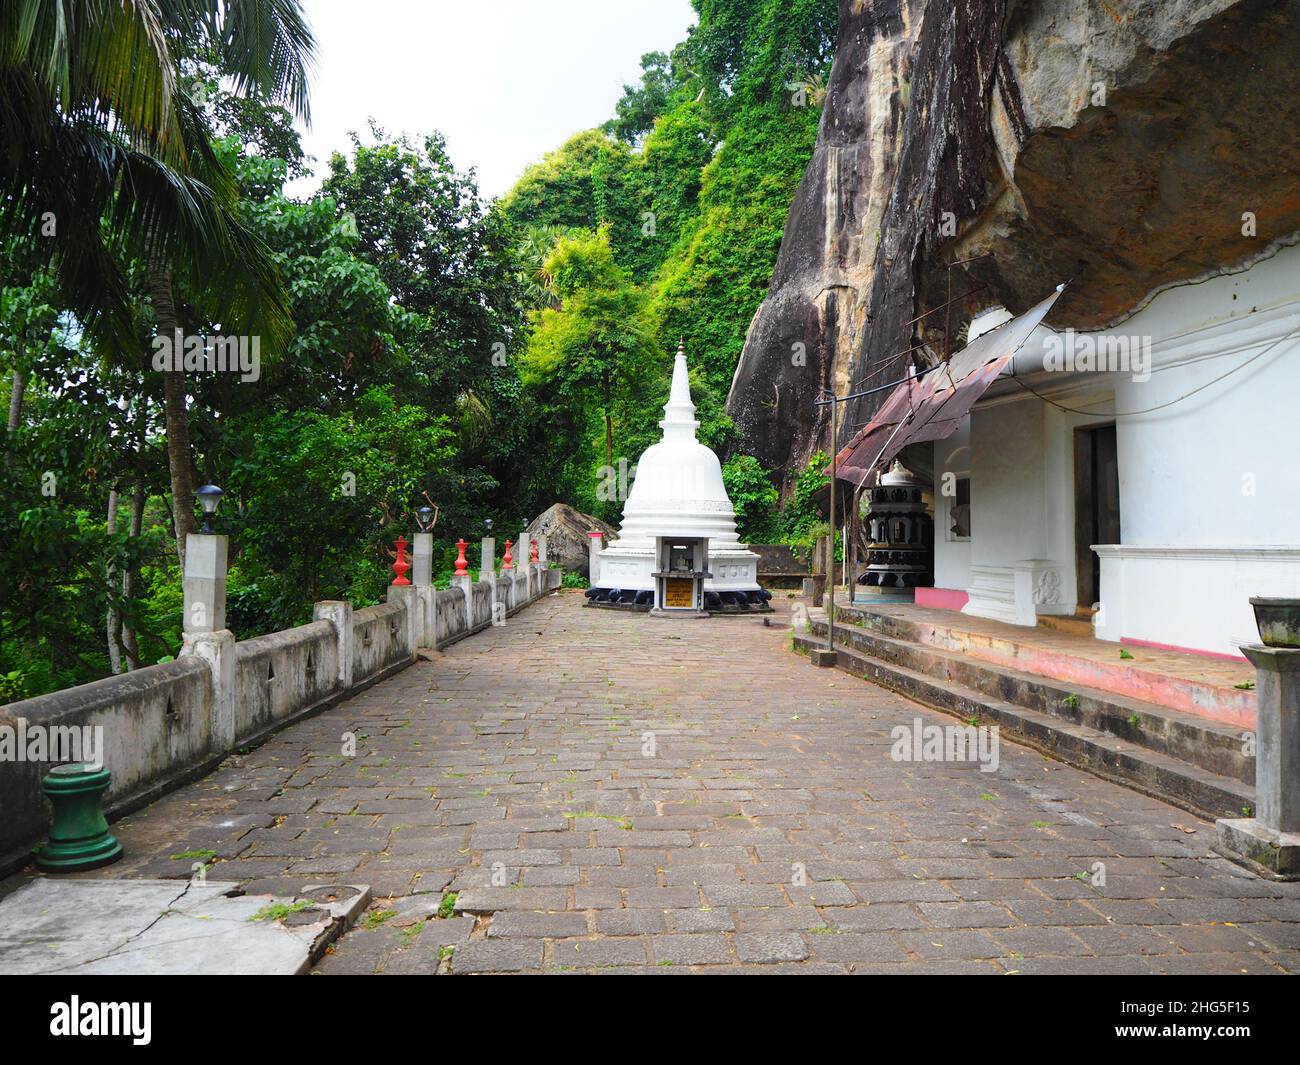 Travel Asia, Temple South East Asia #SriLanka #Asia #aroundtheworld #SouthEastAsia #wanderlust #hinterland #authentic #fernweh #slowtravel #loveasia Stock Photo